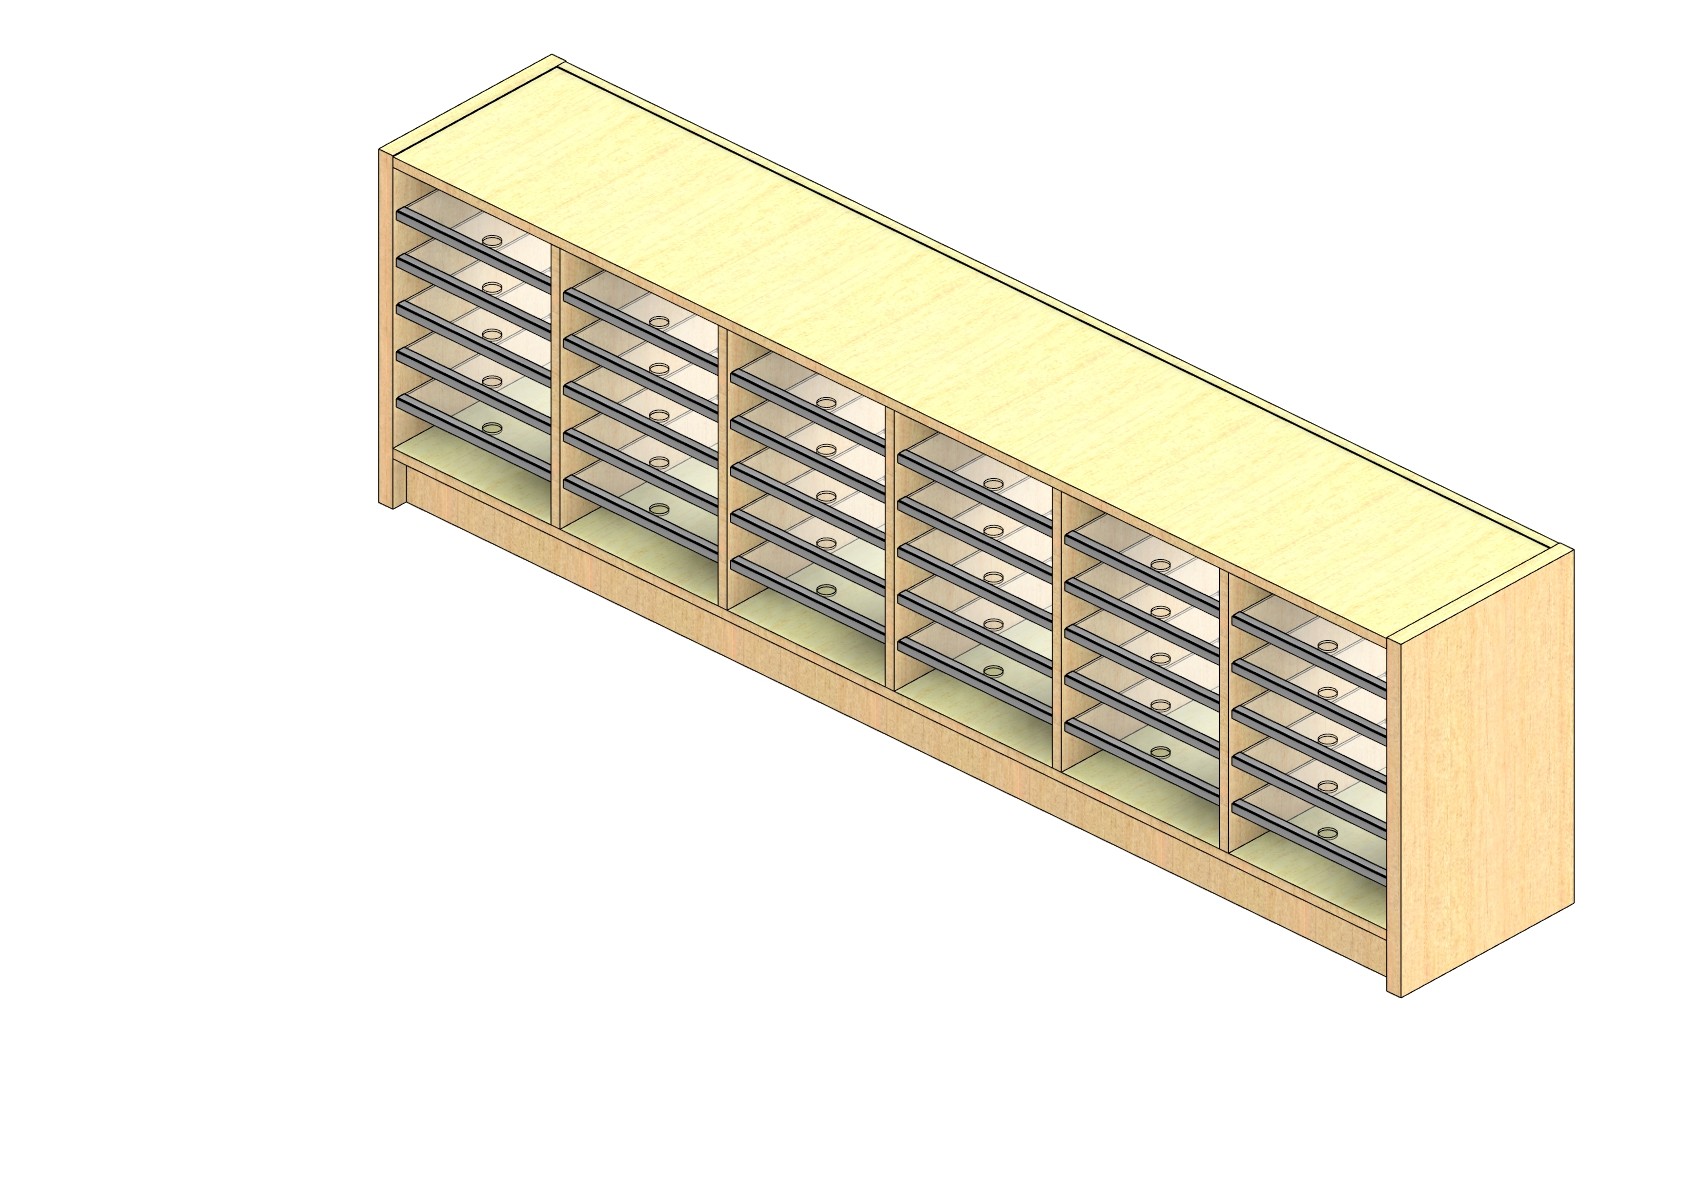 Standard Sized Open Back Sort Module - 6 Columns - 18" Sorting Height w/ 3" Riser